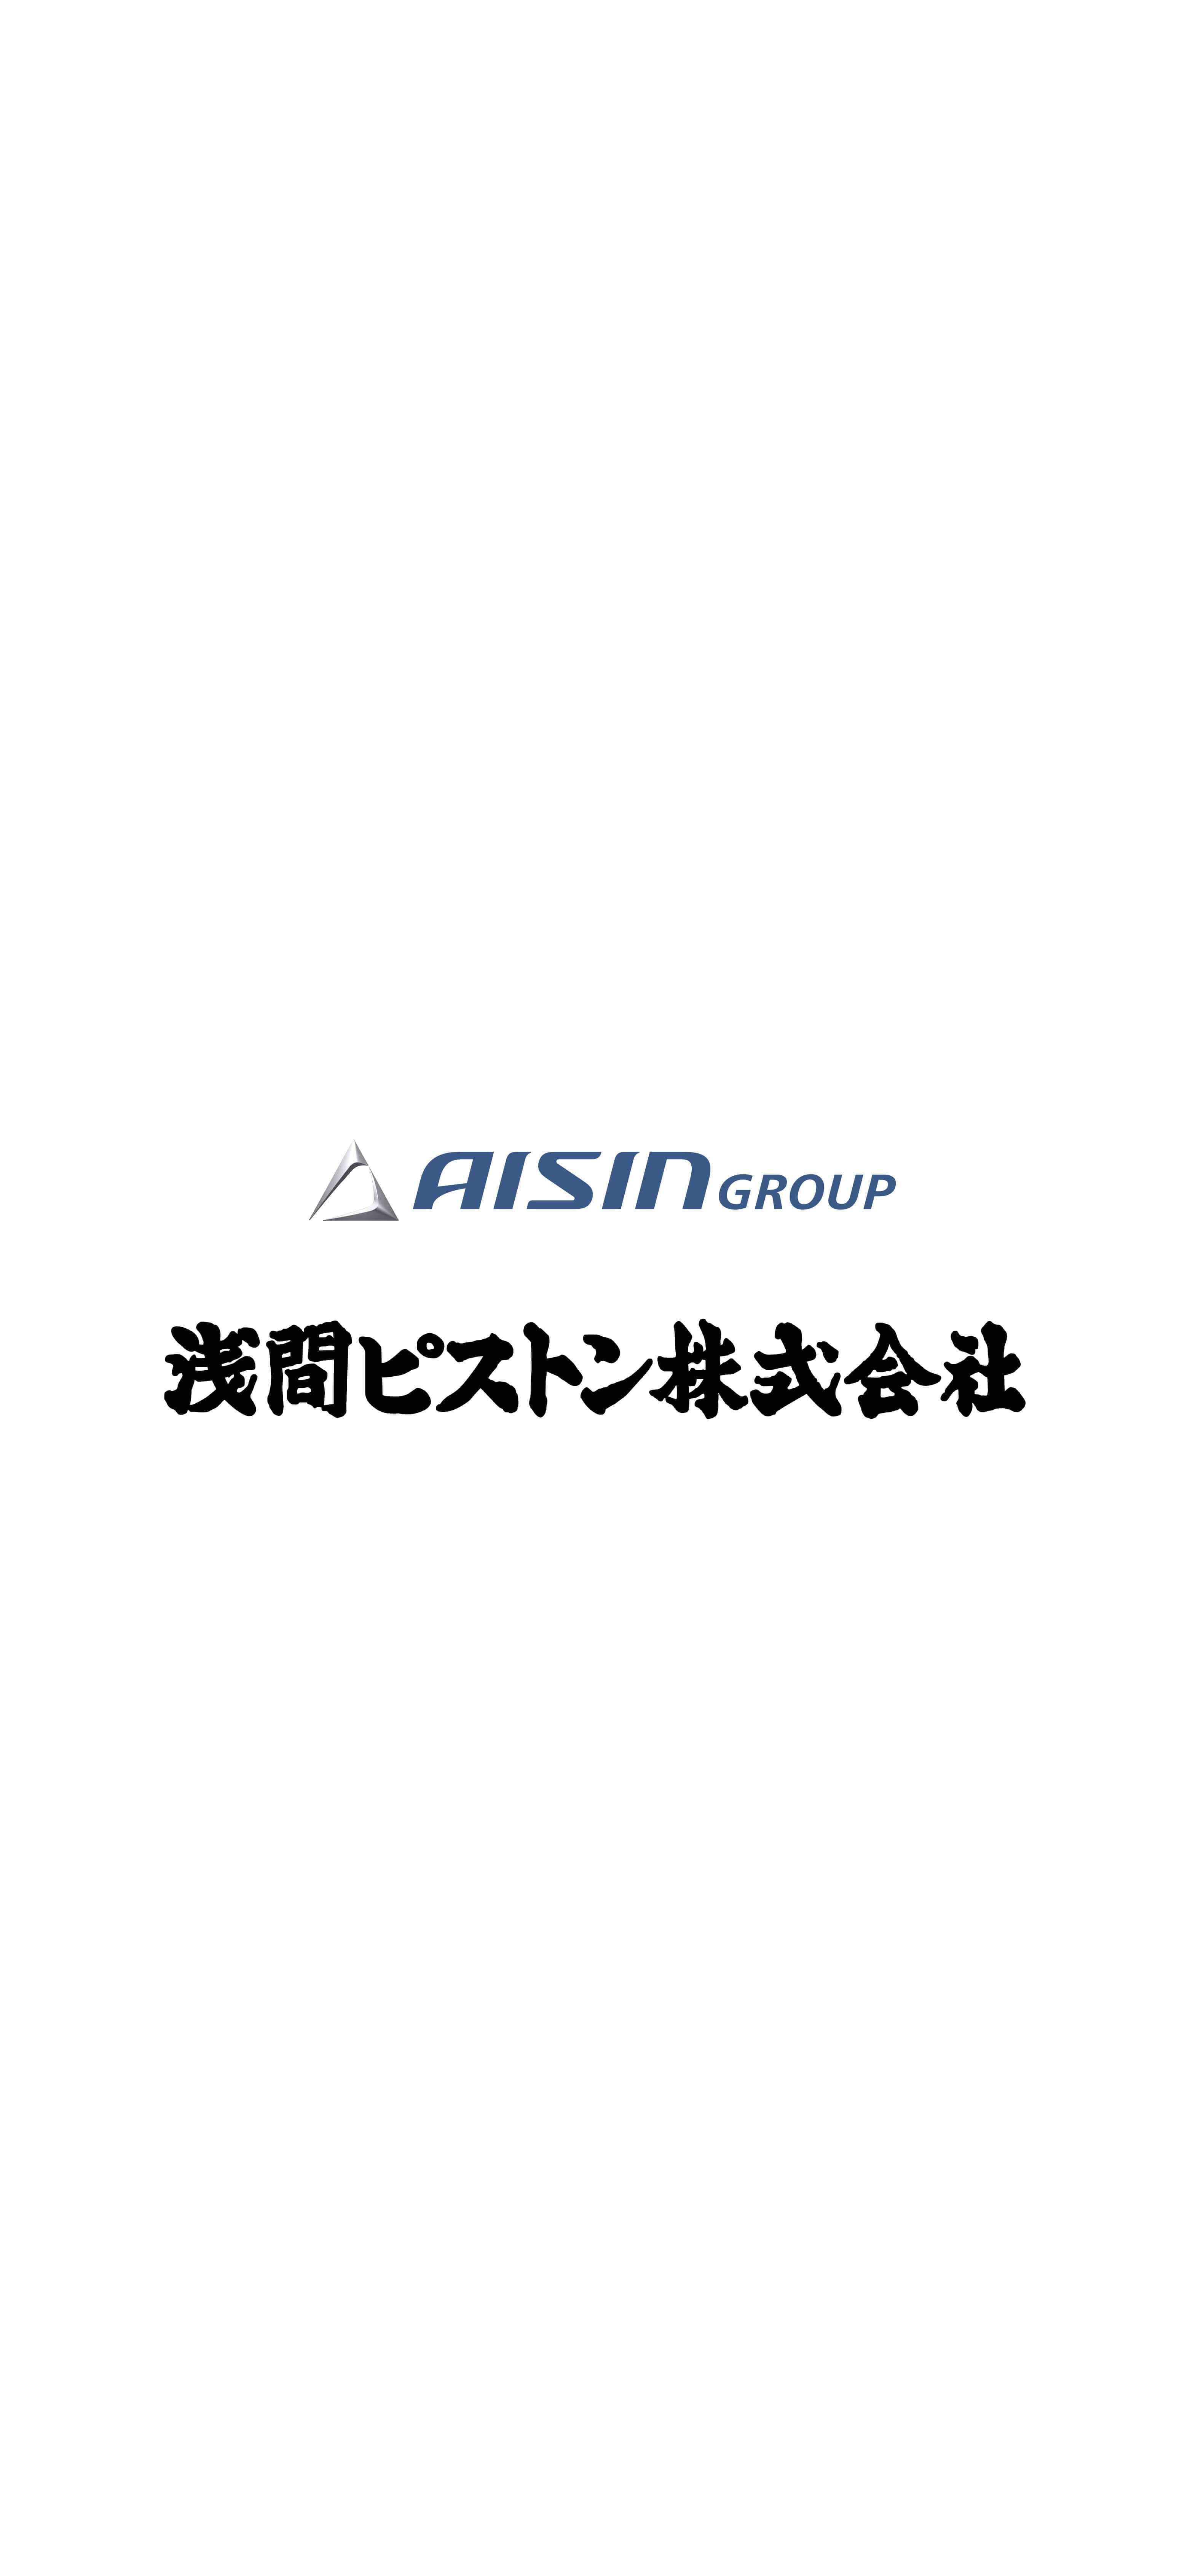 AISIN GROUP 浅間ピストン株式会社